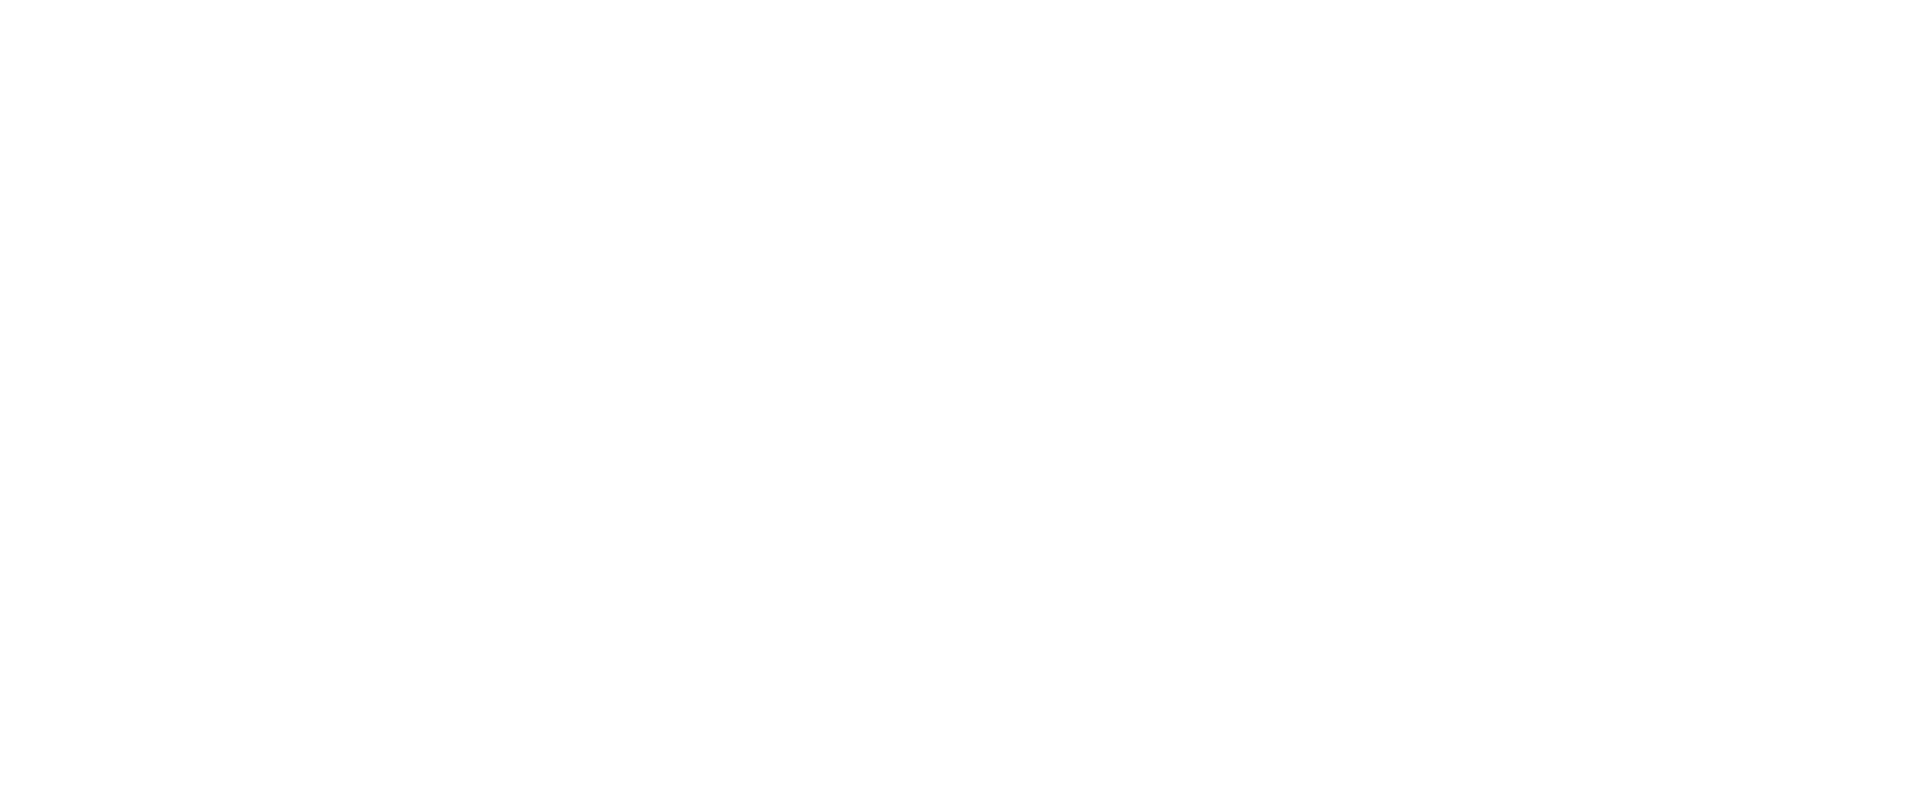 RSR logo wit